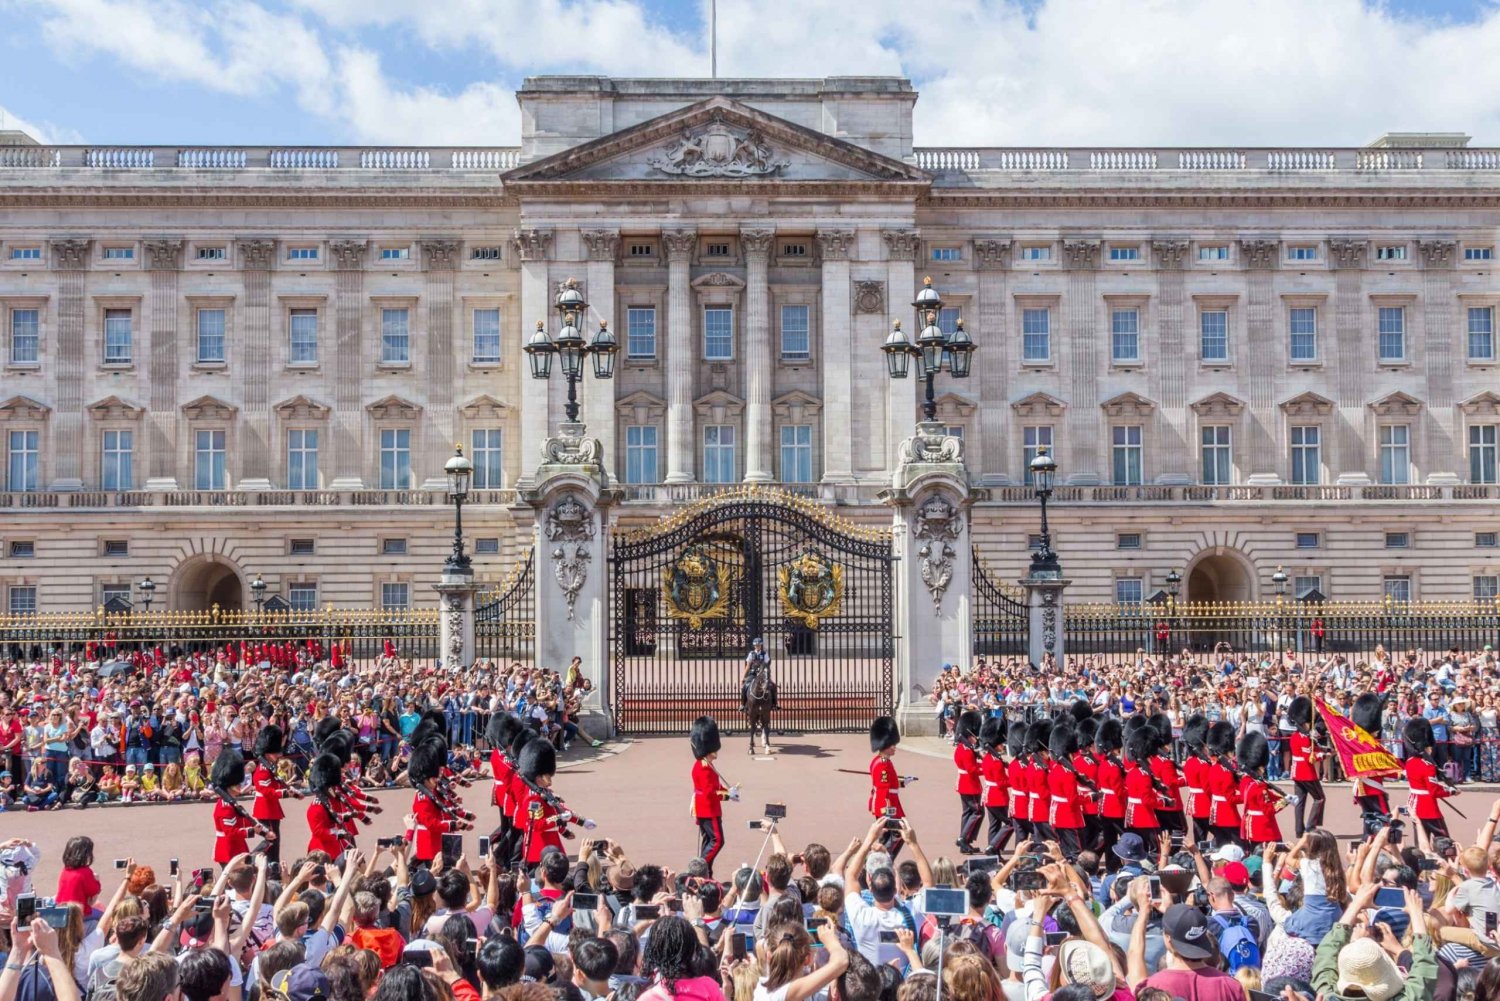 Londres: Buckingham Palace Ticket y Afternoon Tea